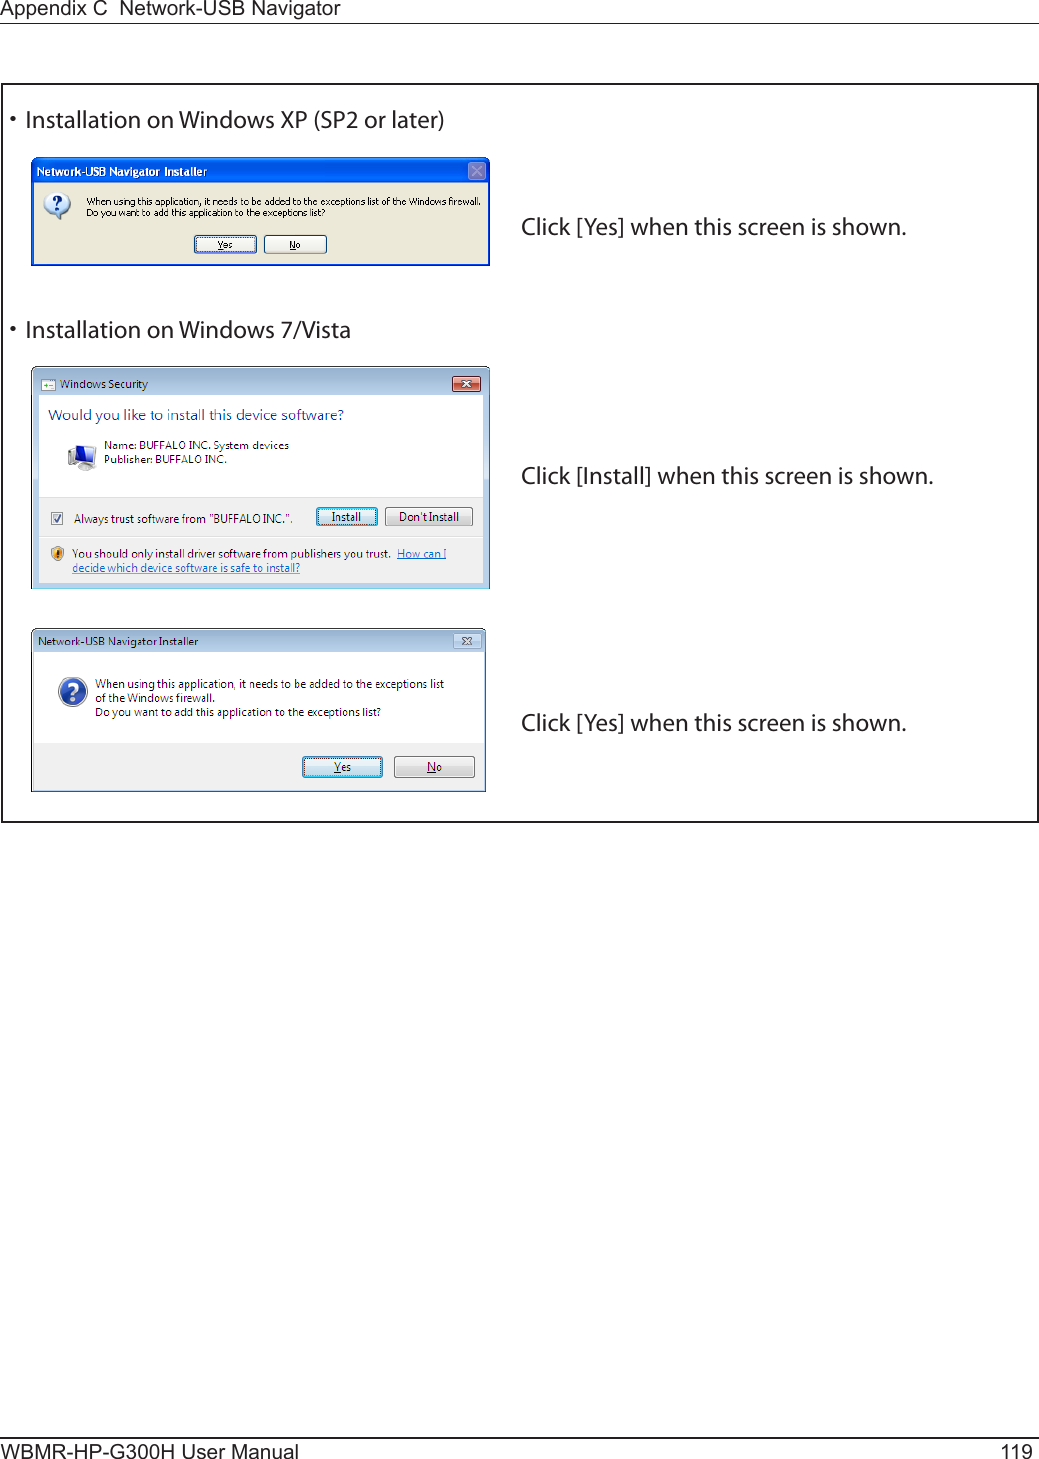 Appendix C  Network-USB NavigatorWBMR-HP-G300H User Manual 119・Installation on Windows XP (SP2 or later)・Installation on Windows 7/Vista Click [Yes] when this screen is shown.Click [Install] when this screen is shown. Click [Yes] when this screen is shown. 